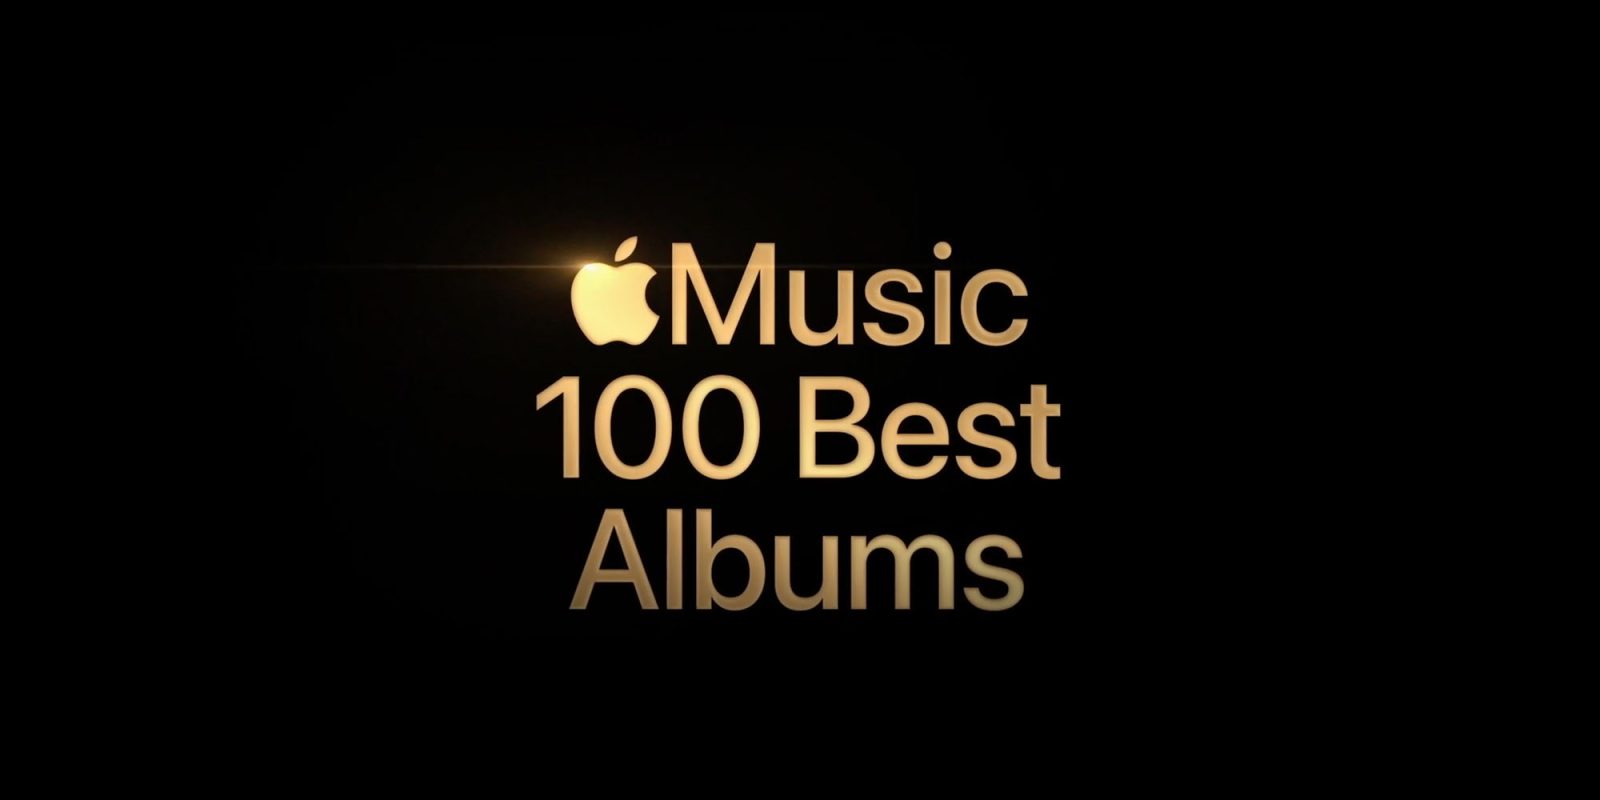 Apple Music best albums | Promo image